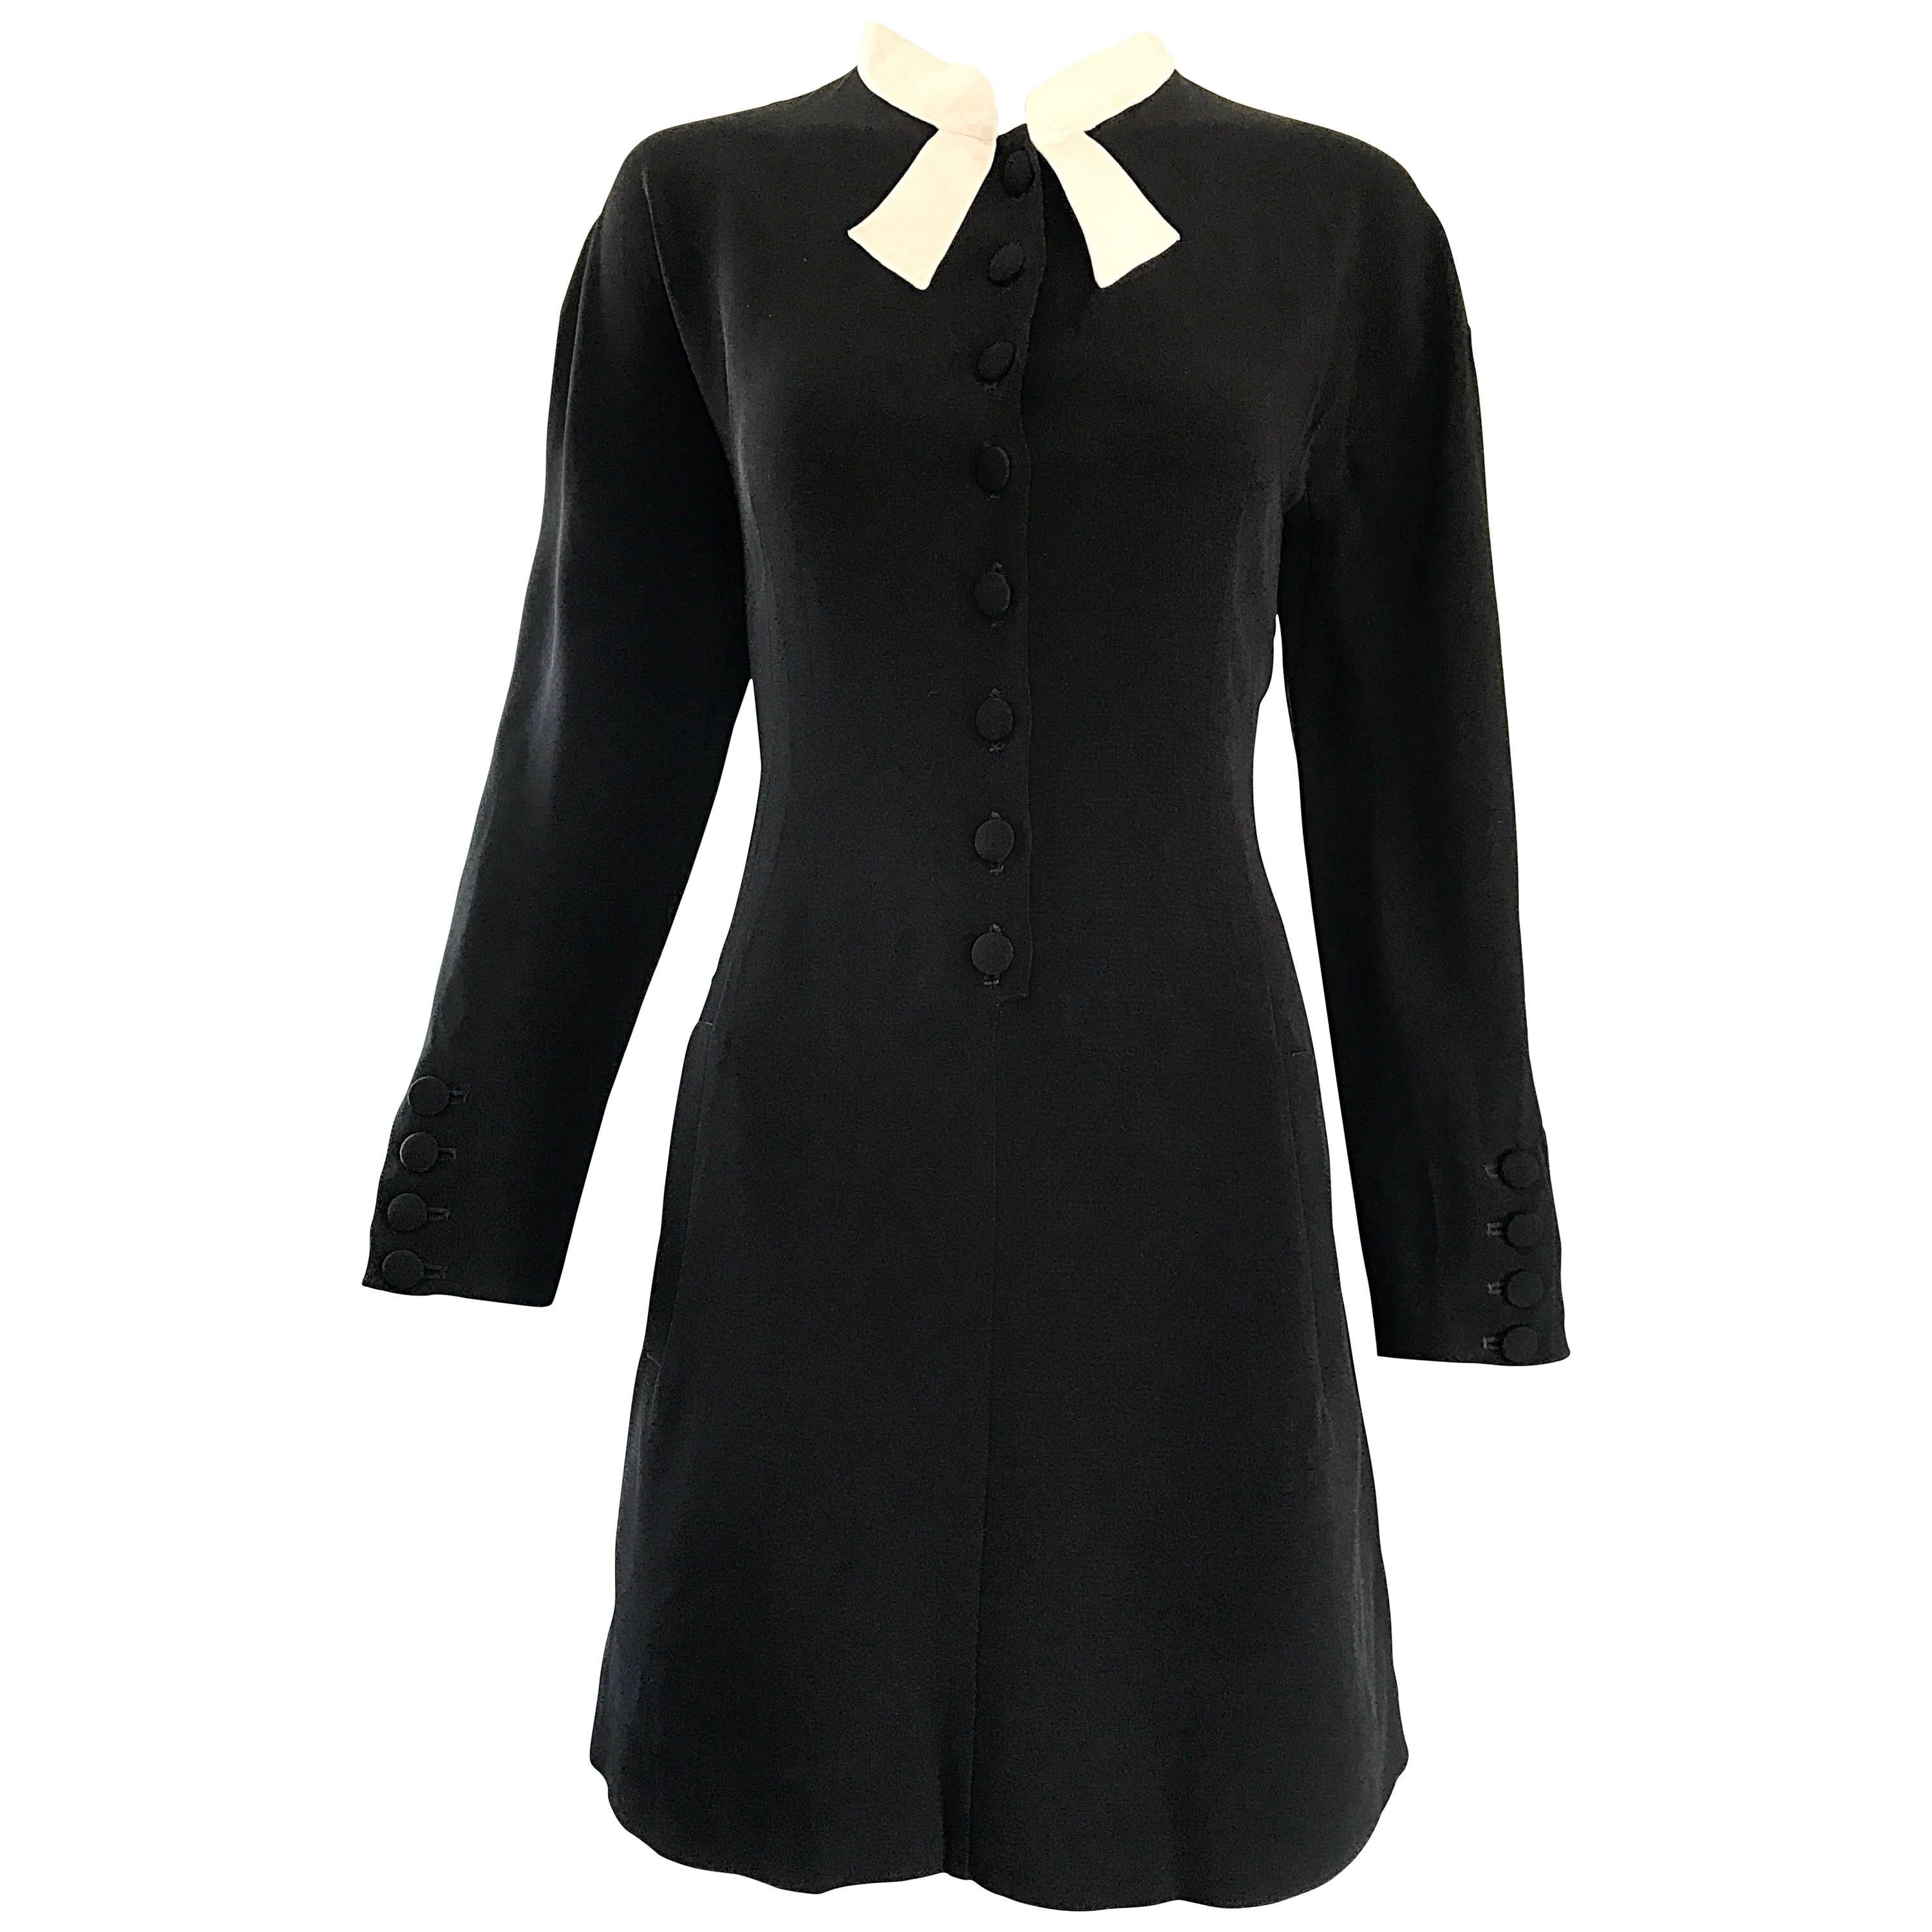 Vintage Kritizia Black and White Long Sleeve Chic Tailored Tuxedo Dress 